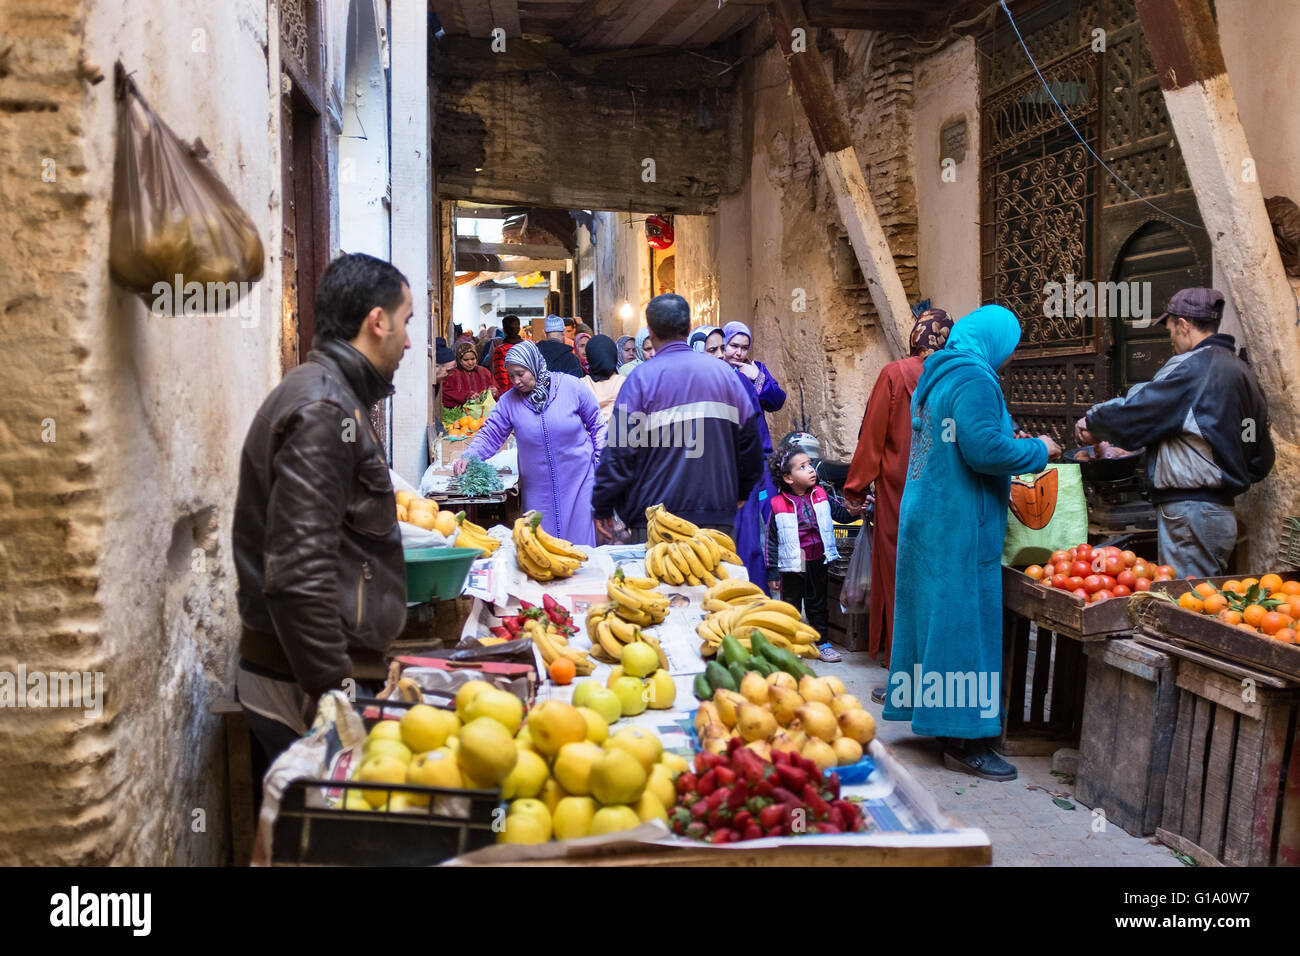 Marché de rue dans la médina de Fès, Maroc Banque D'Images